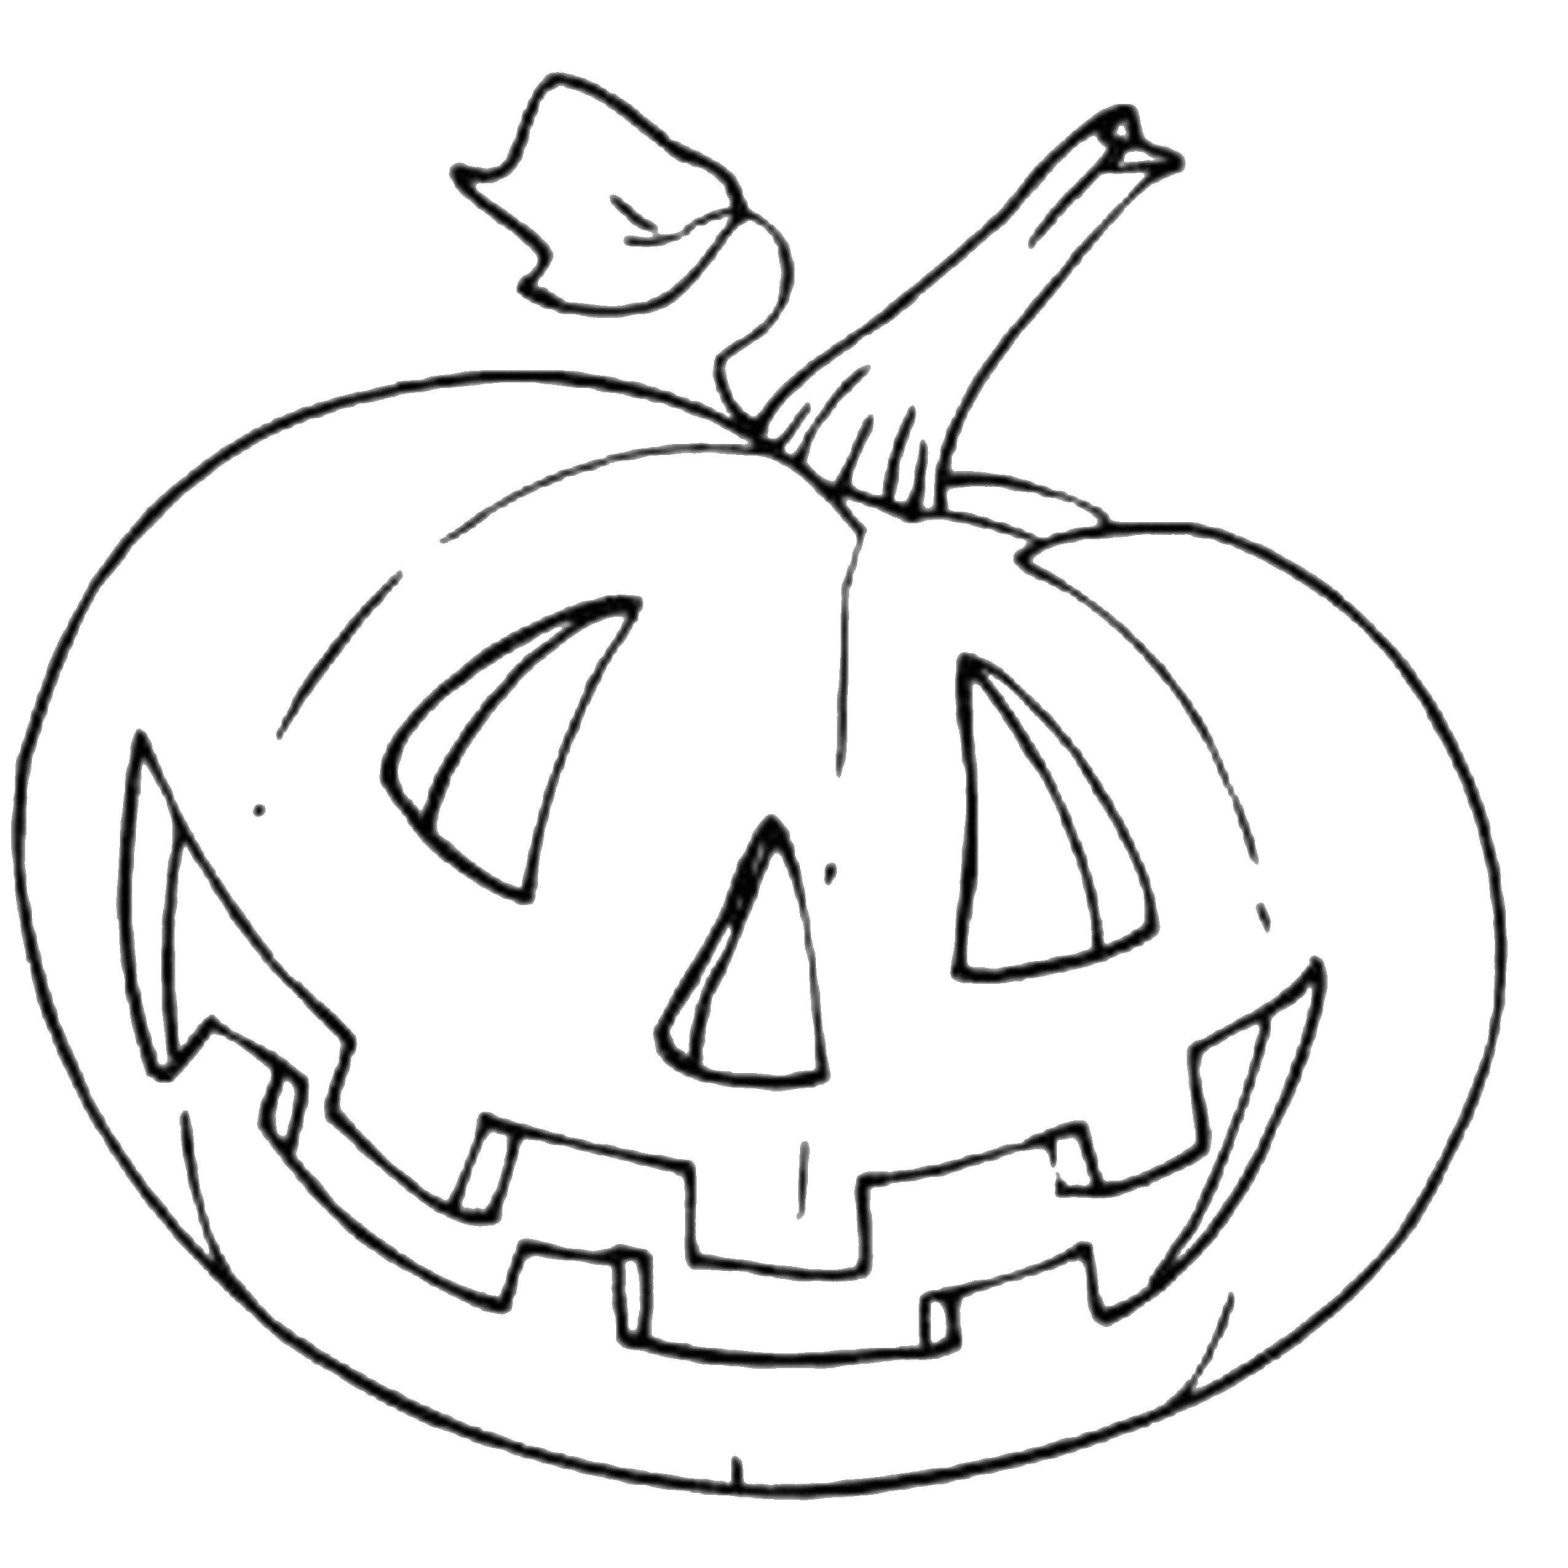 Раскраска тыквы на Хэллоуин для детей (тыквы, праздник)